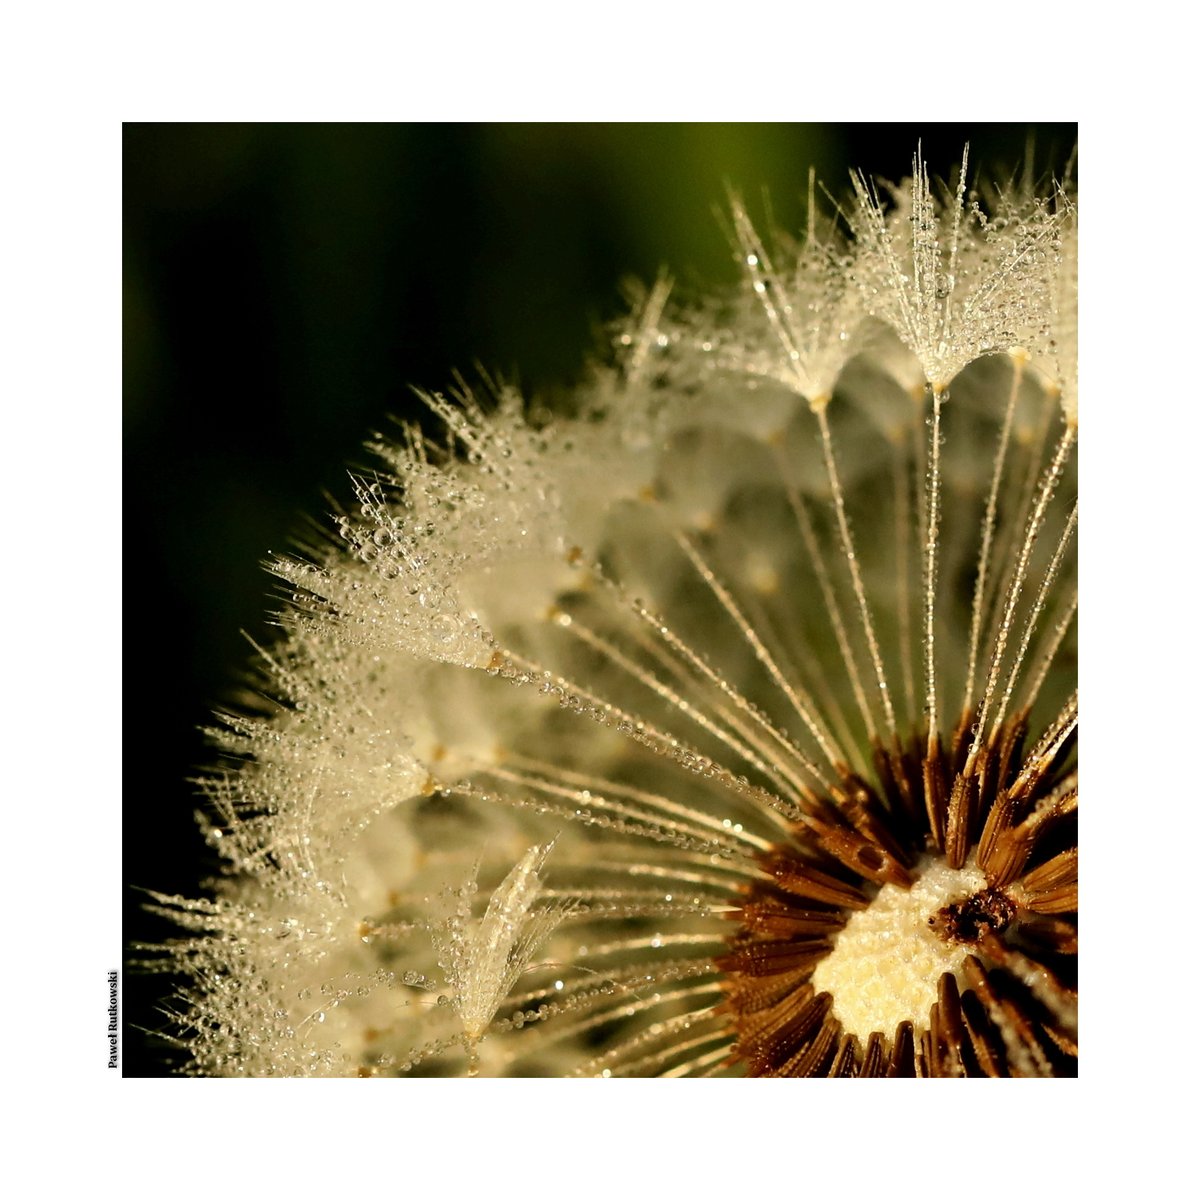 Ćwierć / Quarter #NatureforSunday #dew #dandelion #macro #ThePhotoHour